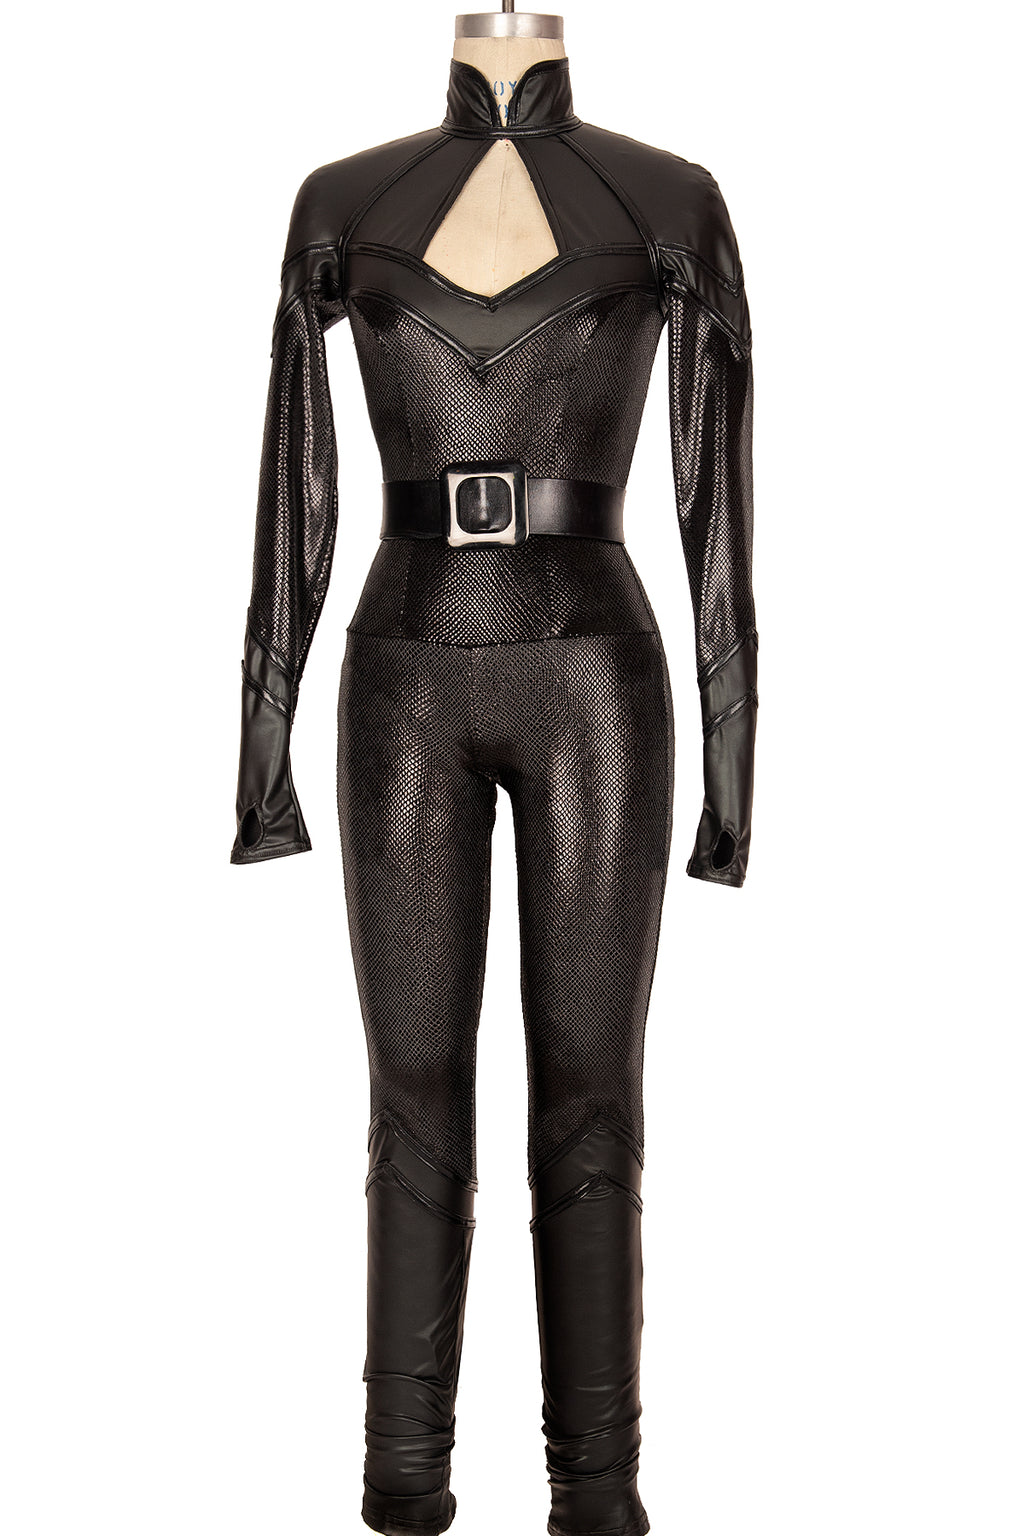 Black Widow Catsuit & Belt – Trashy.com